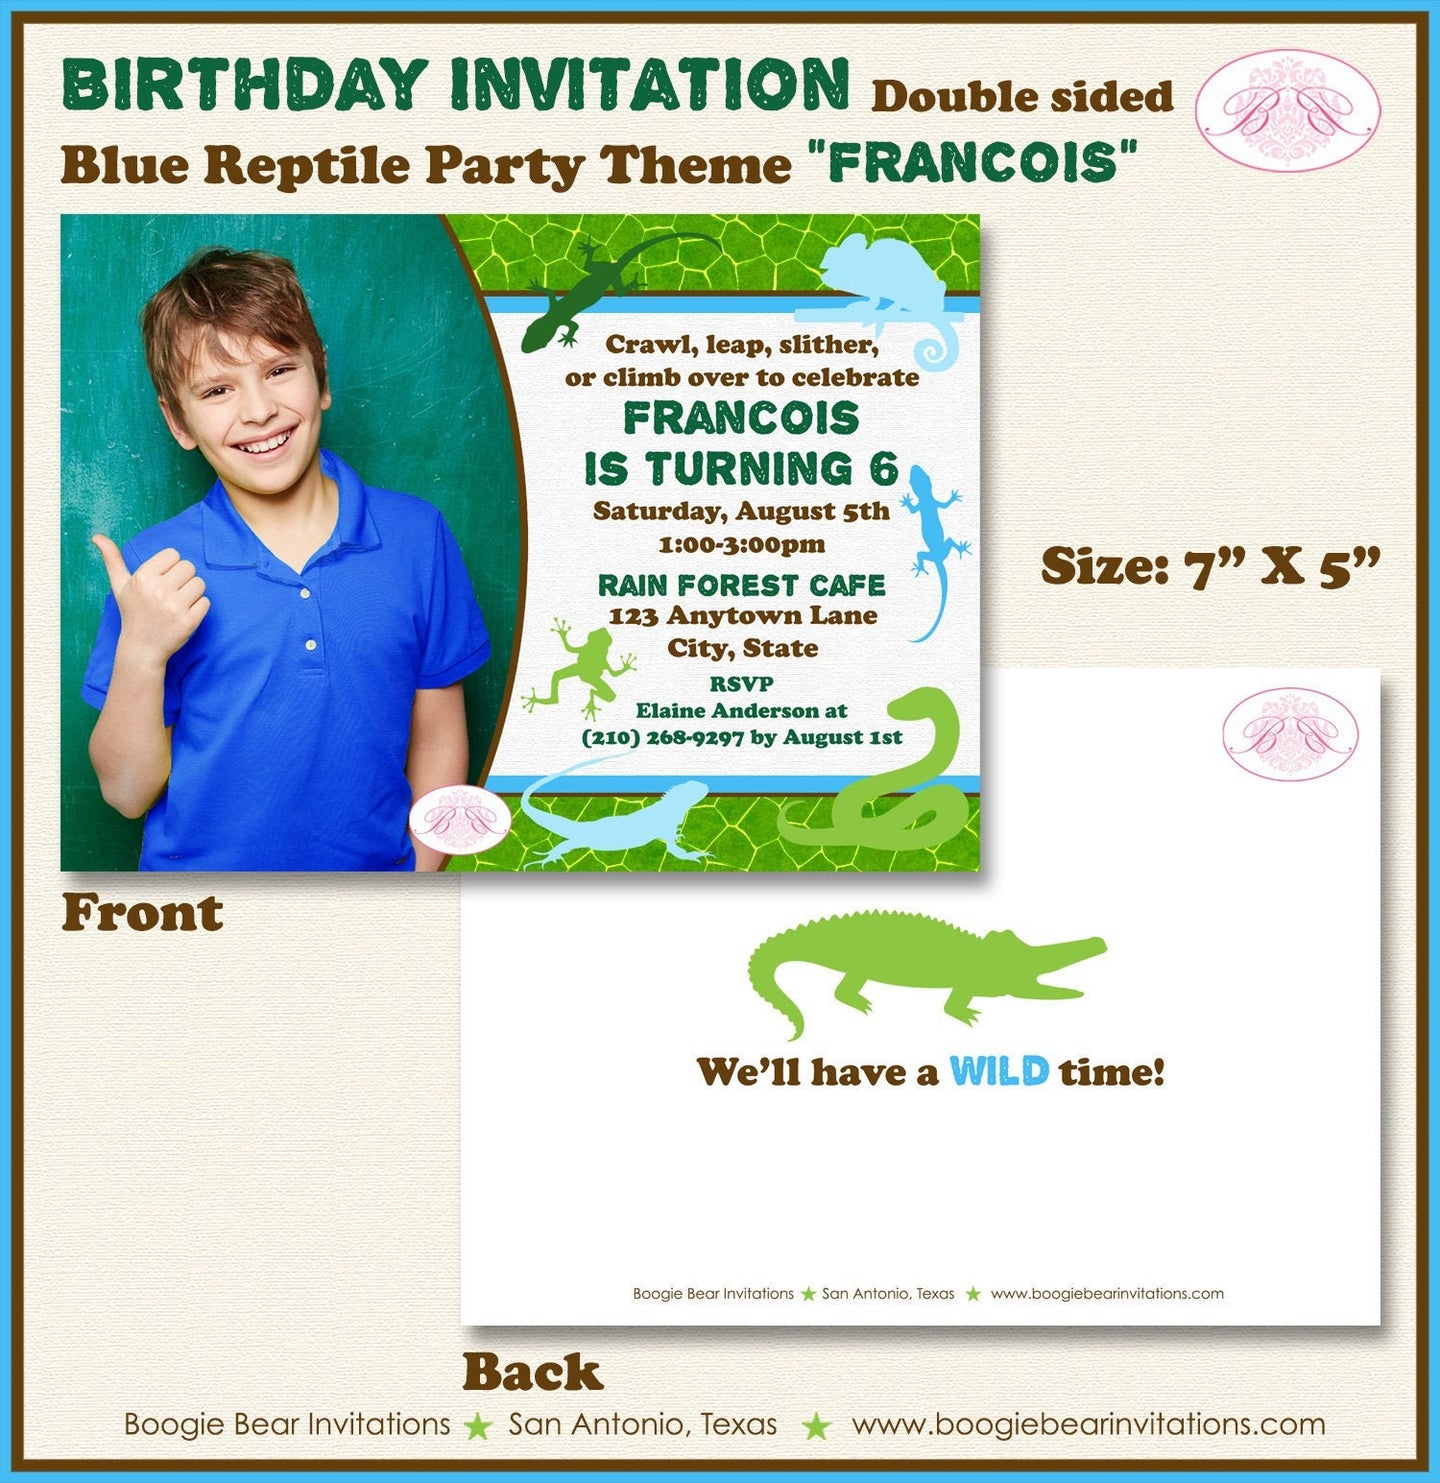 Reptile Birthday Party Invitation Photo Blue Snake Lizard Frog Chameleon Boogie Bear Invitations Francois Theme Paperless Printable Printed